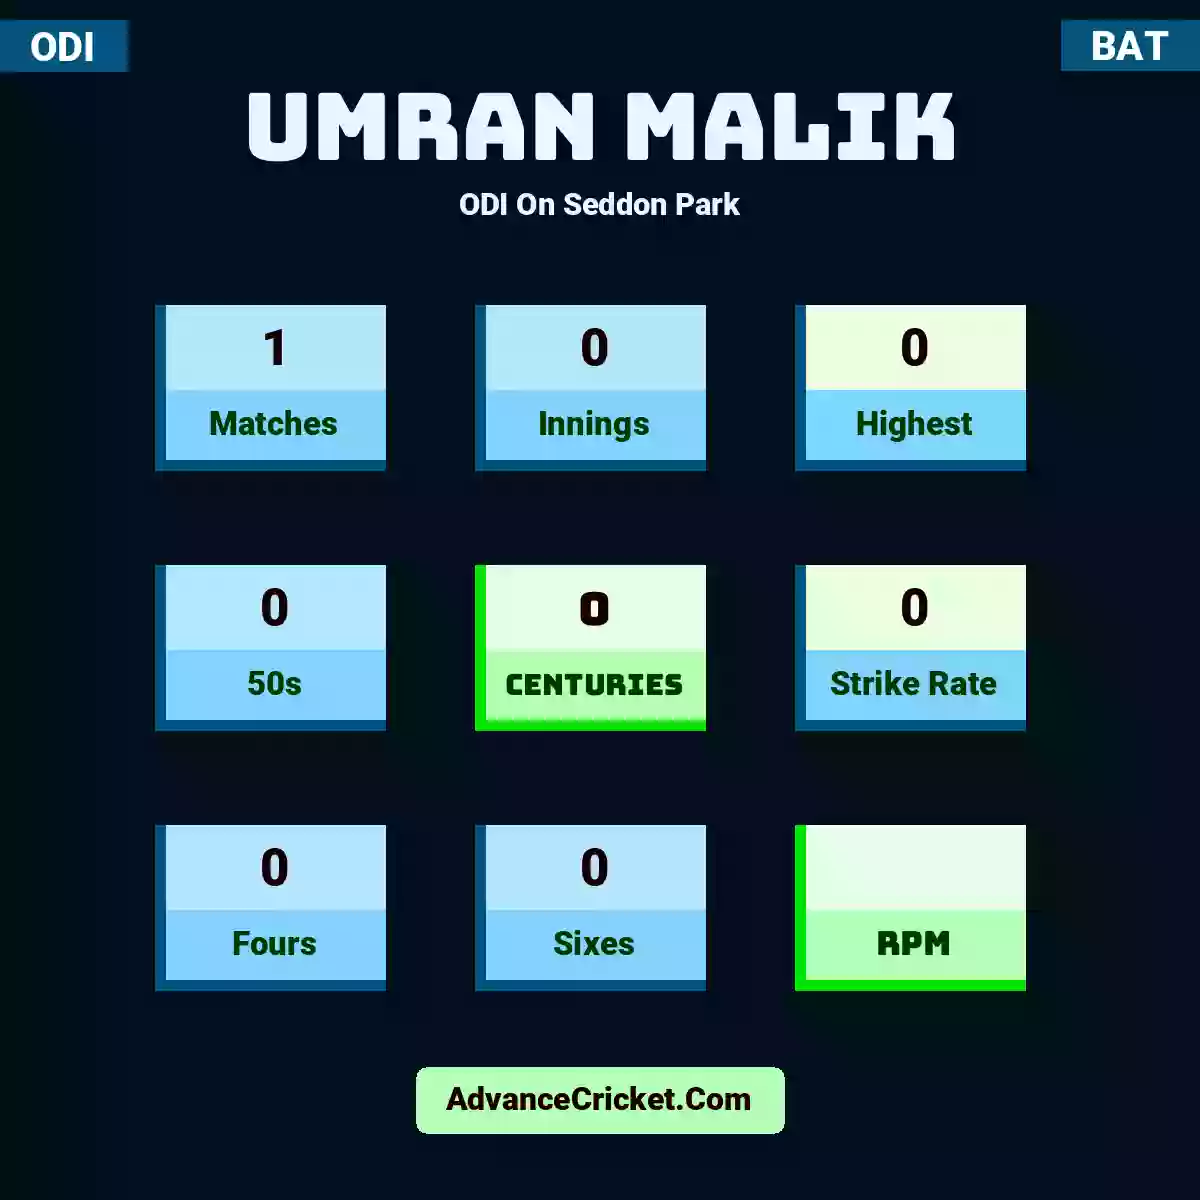 Umran Malik ODI  On Seddon Park, Umran Malik played 1 matches, scored 0 runs as highest, 0 half-centuries, and 0 centuries, with a strike rate of 0. U.Malik hit 0 fours and 0 sixes.